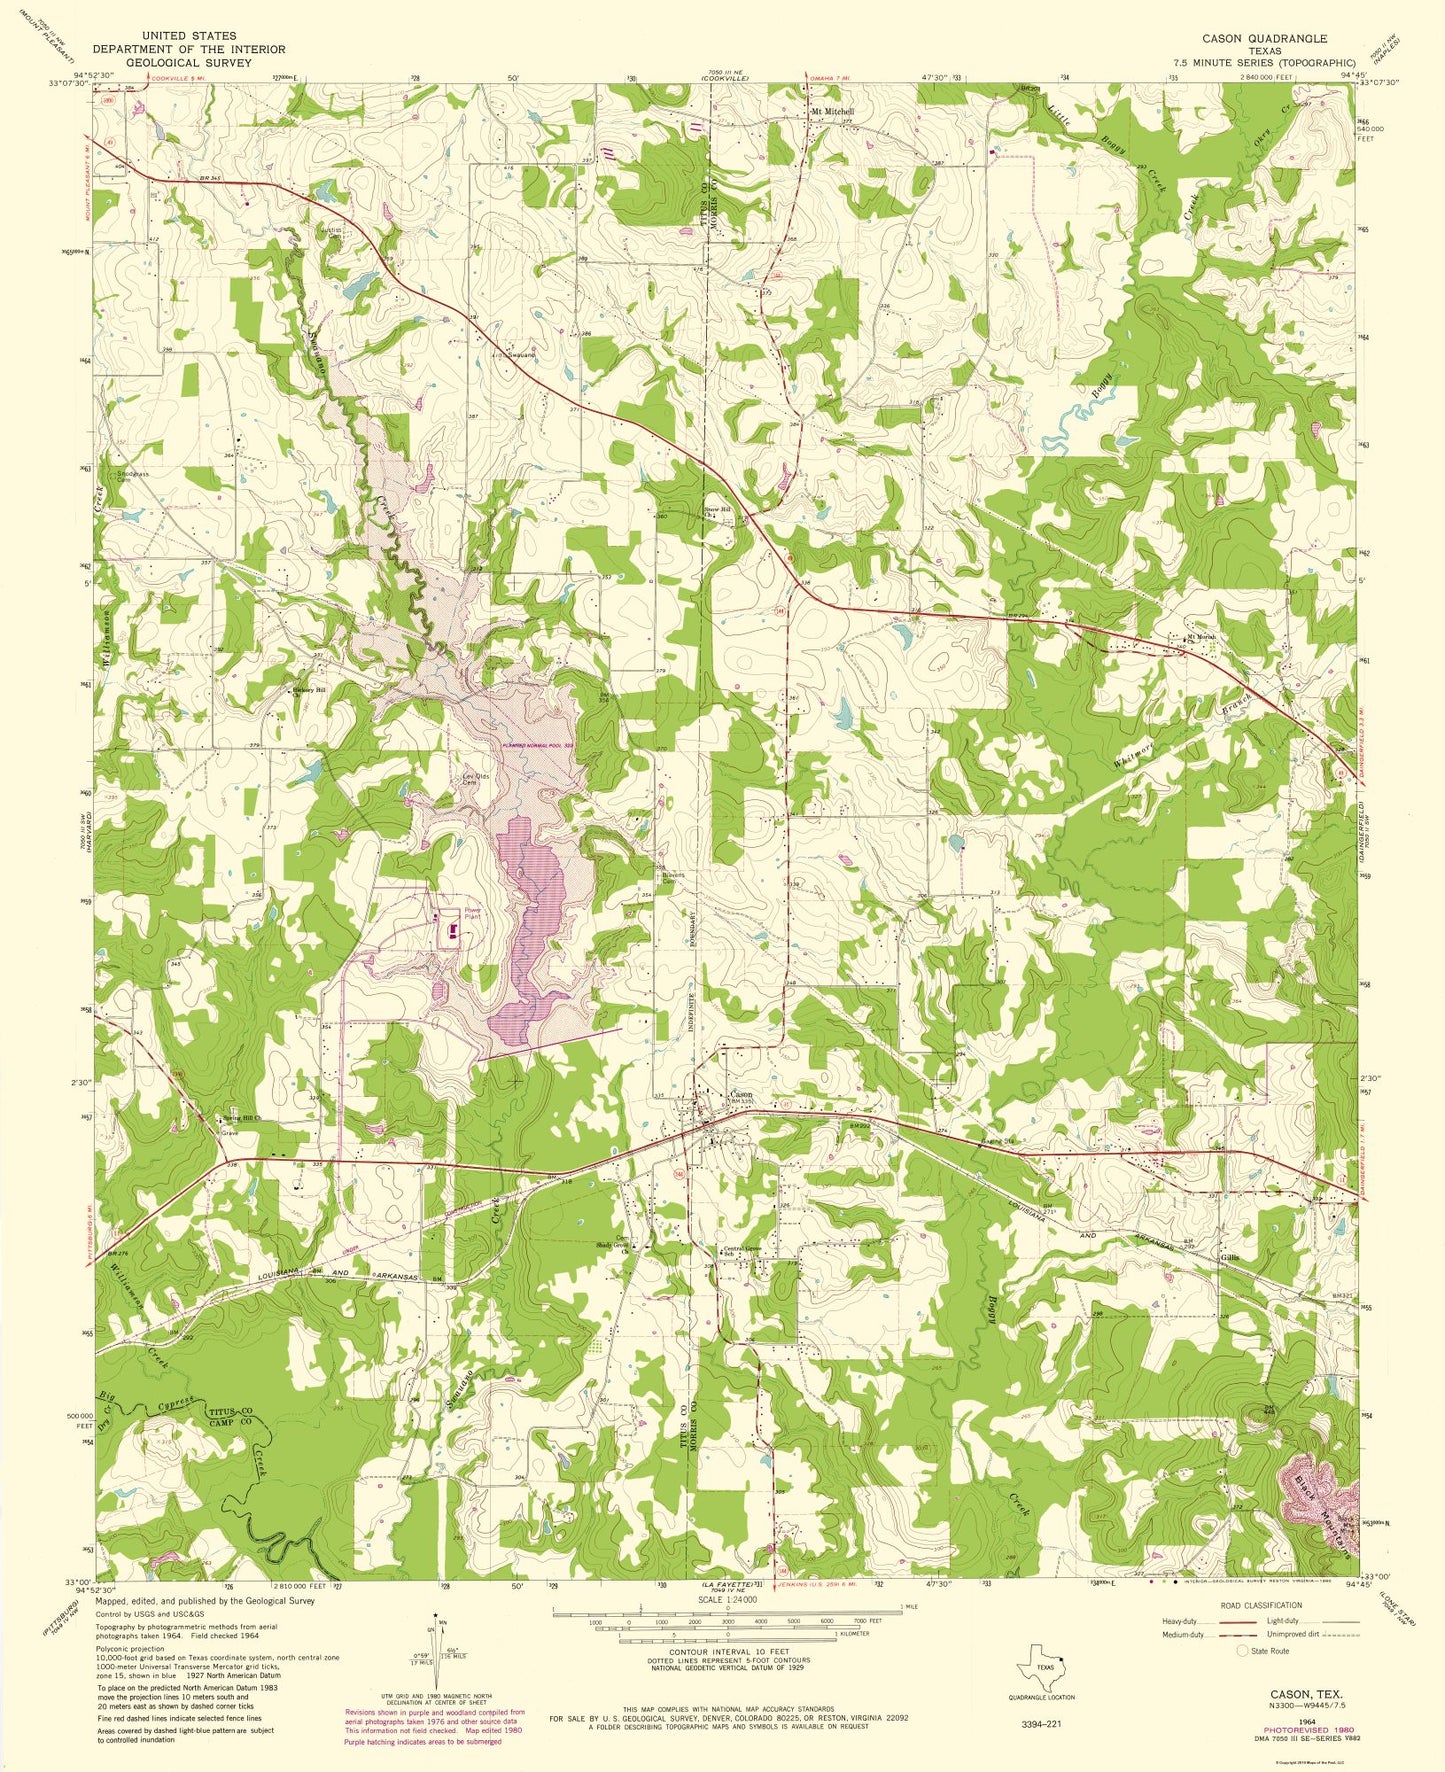 Topographical Map - Cason Texas Quad - USGS 1980 - 23 x 28.20 - Vintage Wall Art